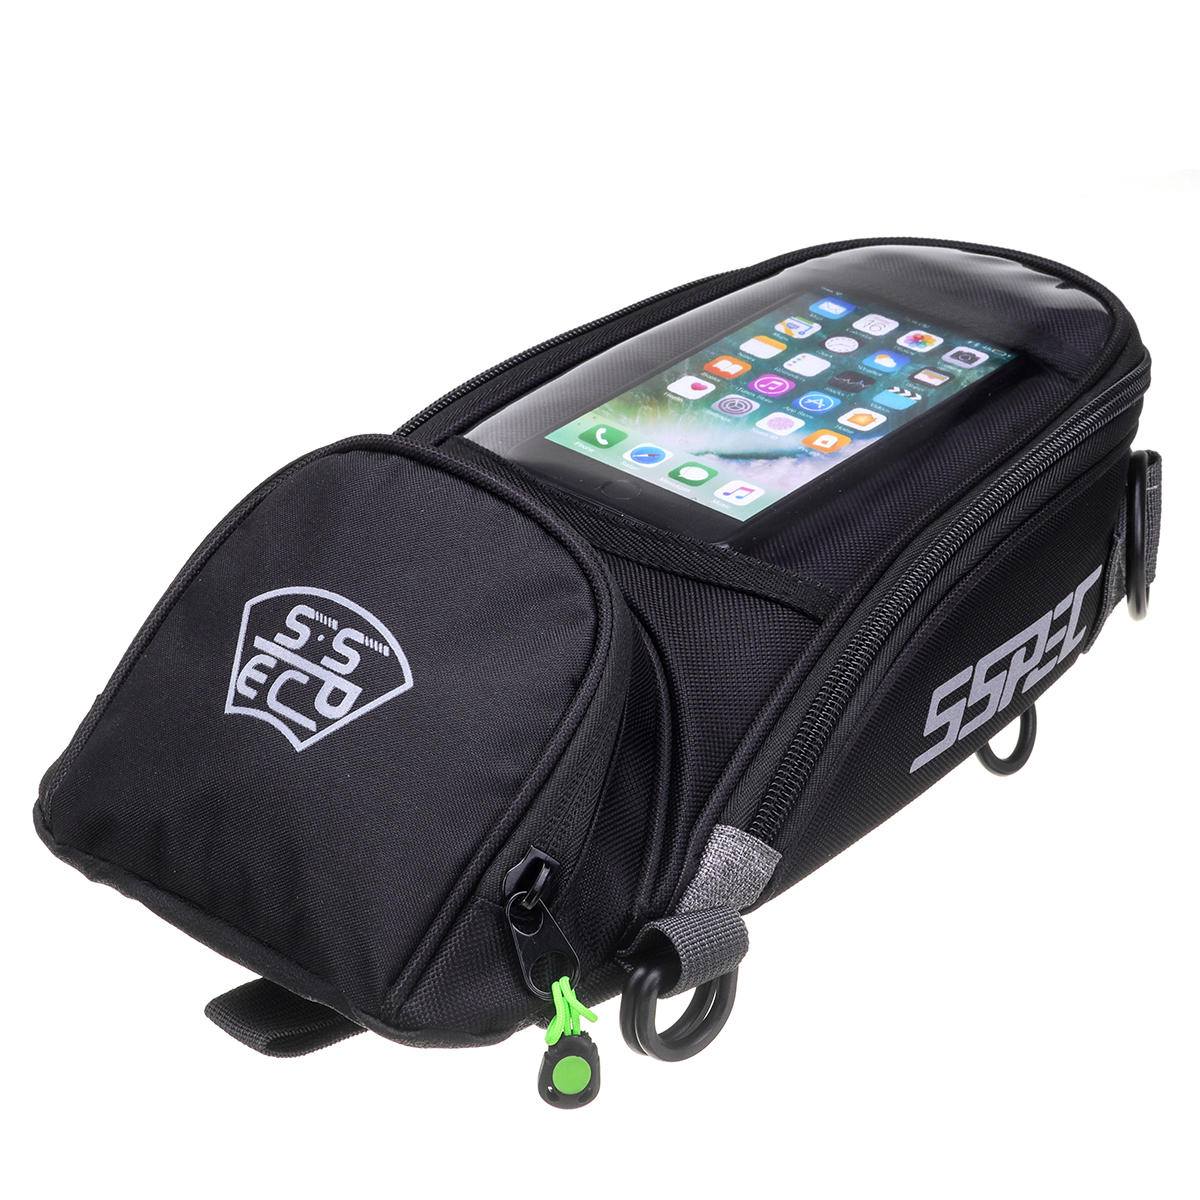 SSPEC Motorcycle Oil Fuel Tank Bag Saddlebags Magnetic Waterproof For Phone GPS